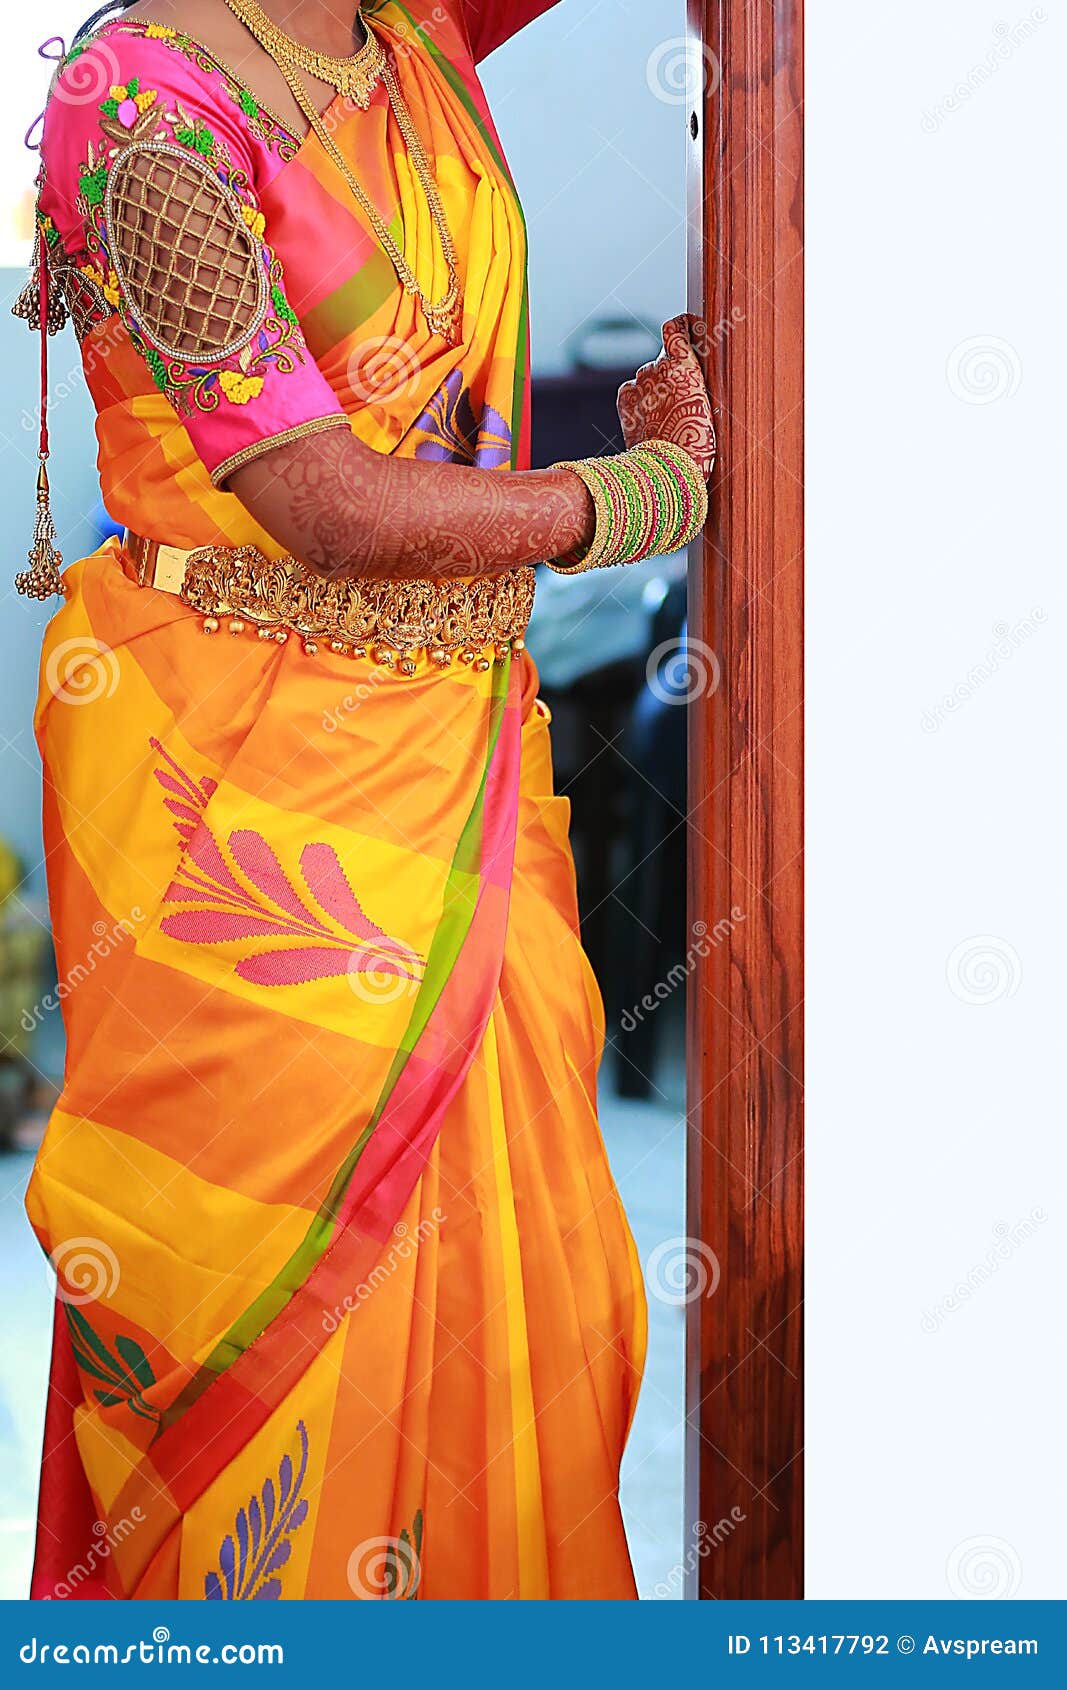 south-indian-wedding-pose-1280×720 | Pic IT Studio